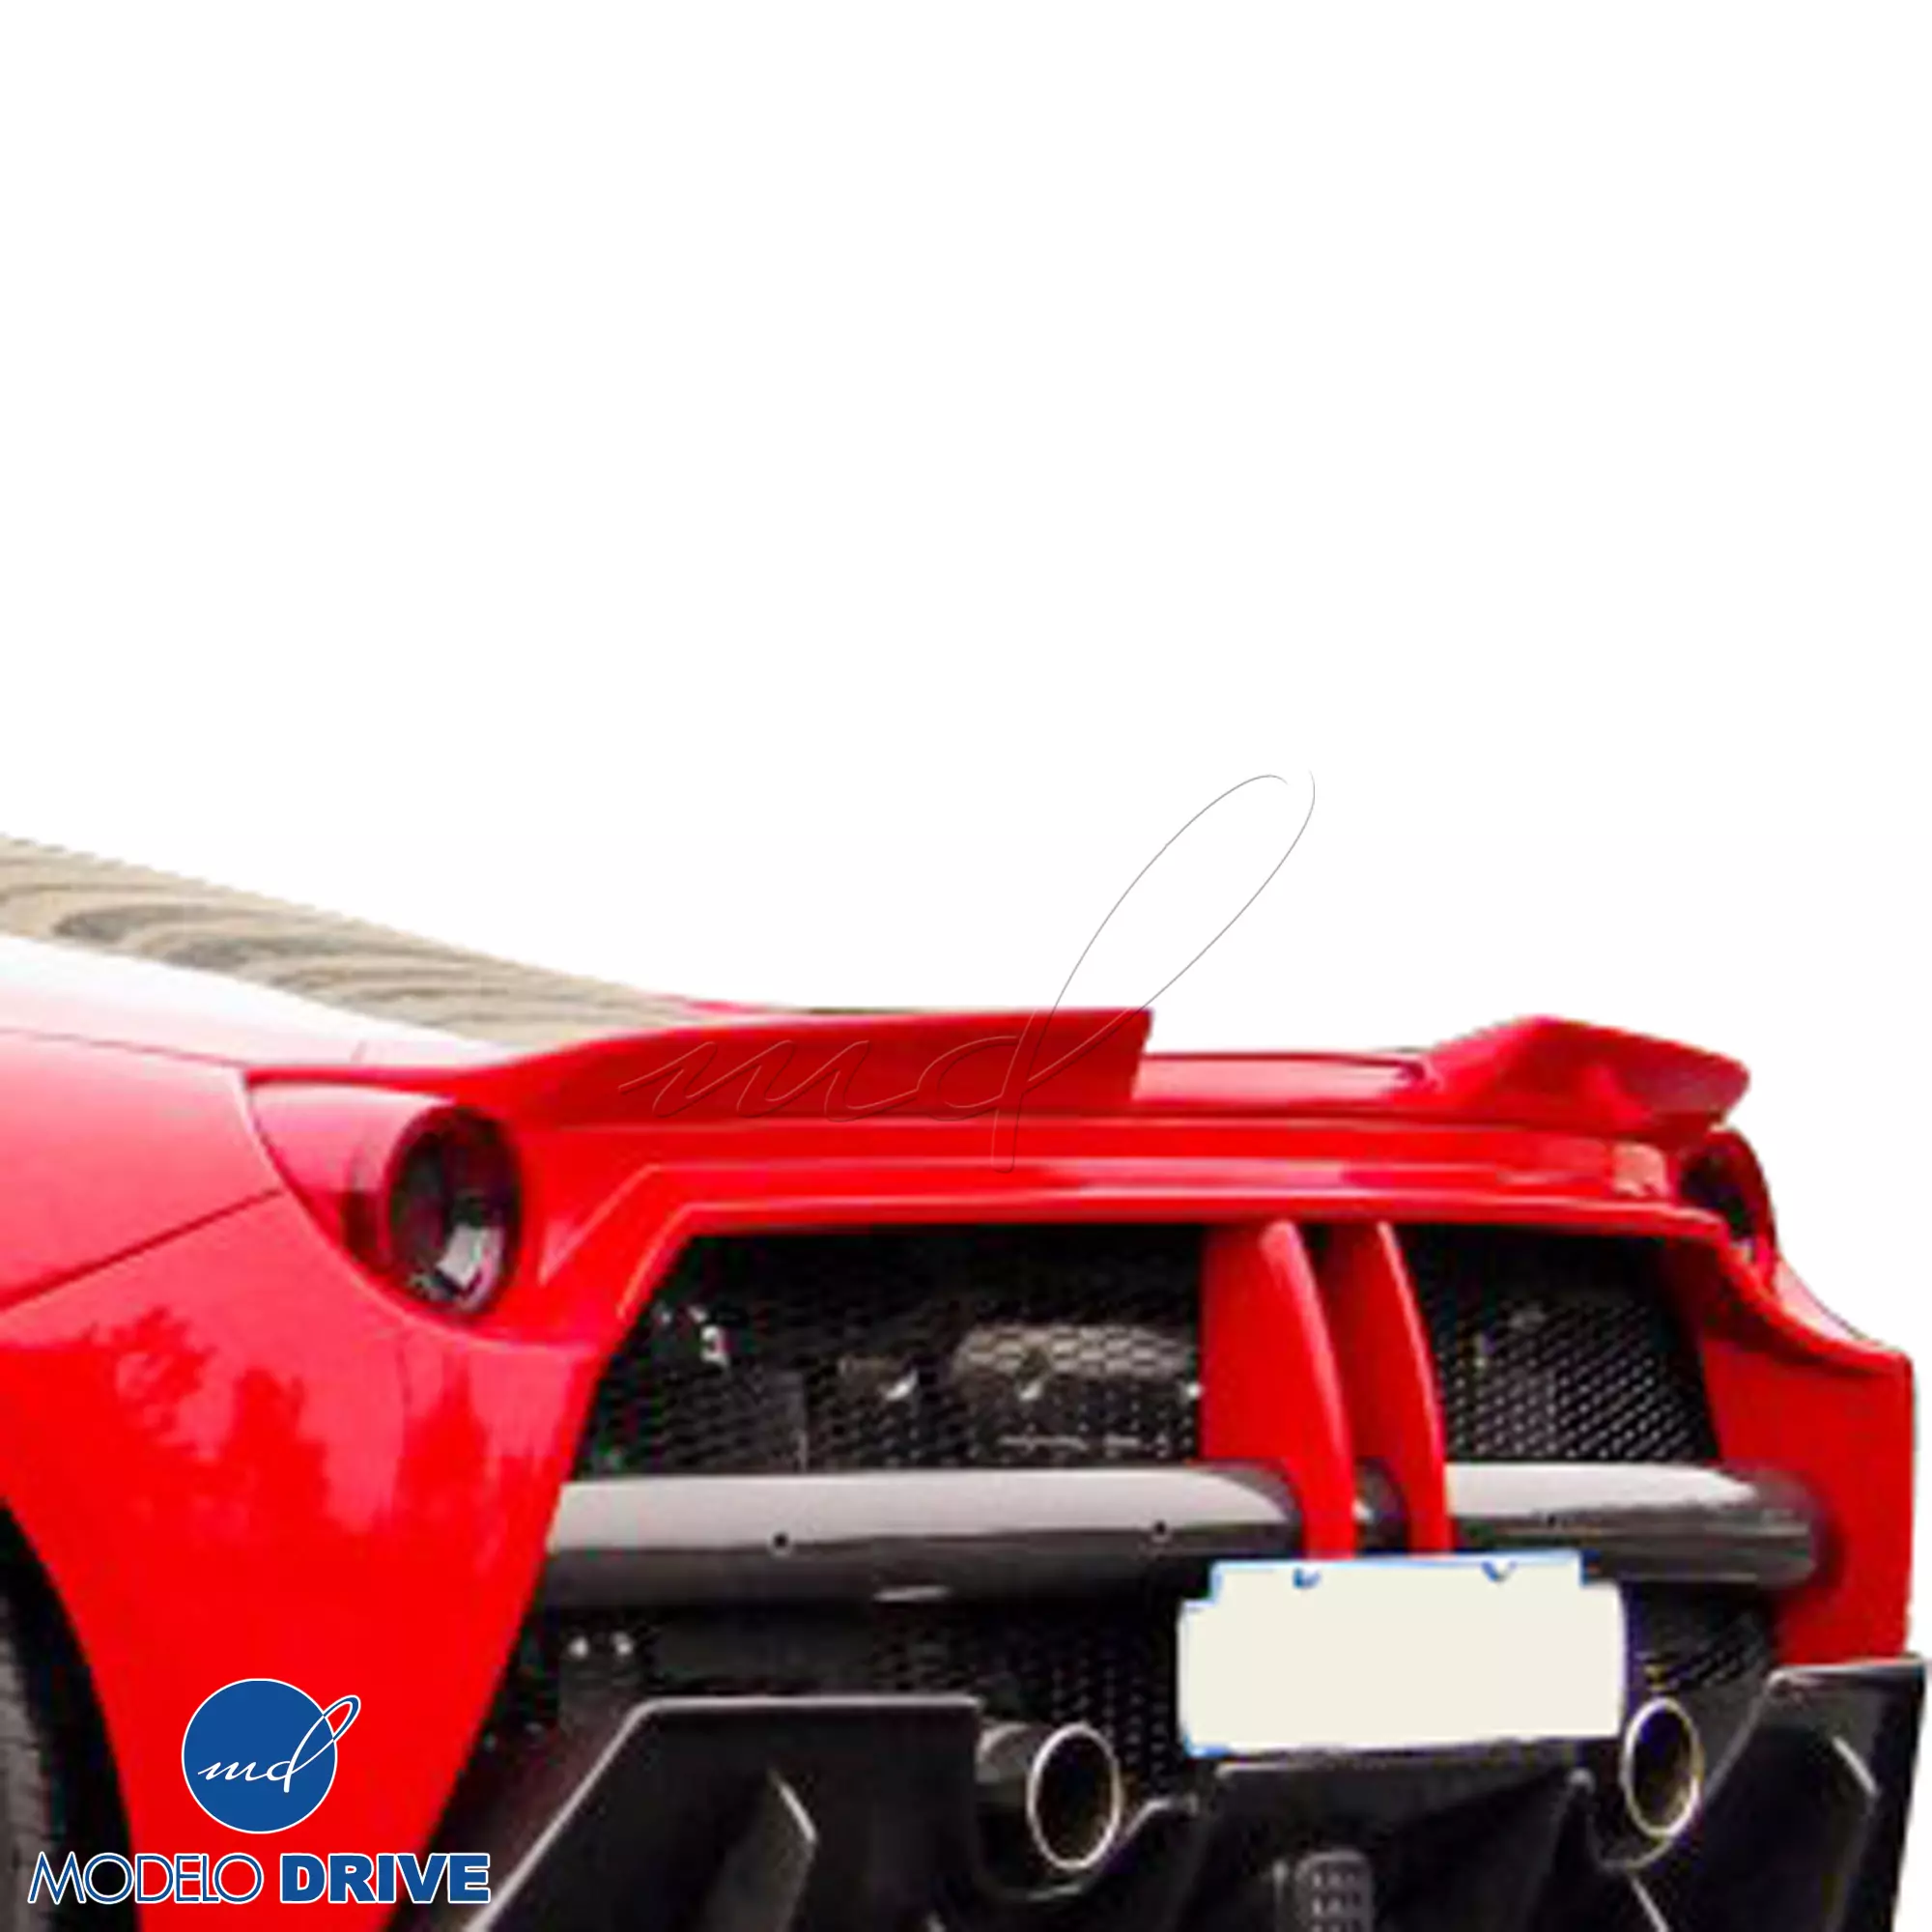 ModeloDrive Partial Carbon Fiber MDES Body Kit > Ferrari 488 GTB F142M 2016-2019 - Image 53